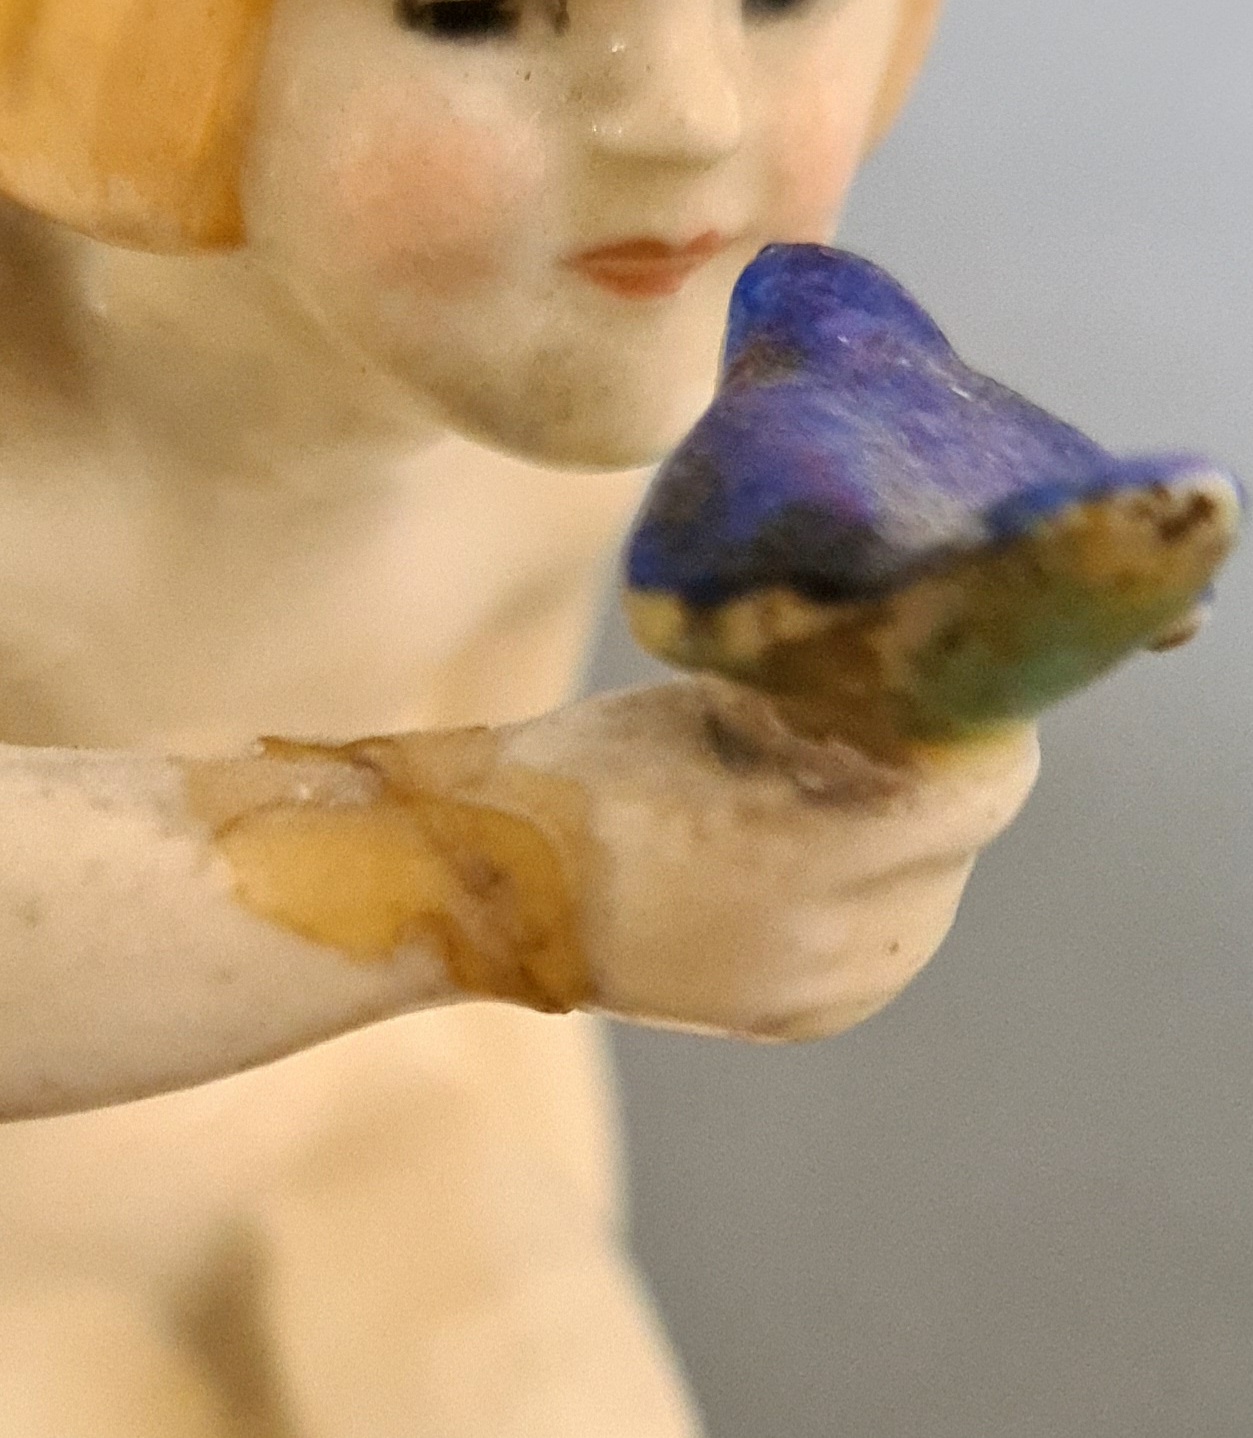 A Royal Doulton porcelain figure 'Blue Bird', HN1280 - Image 3 of 3